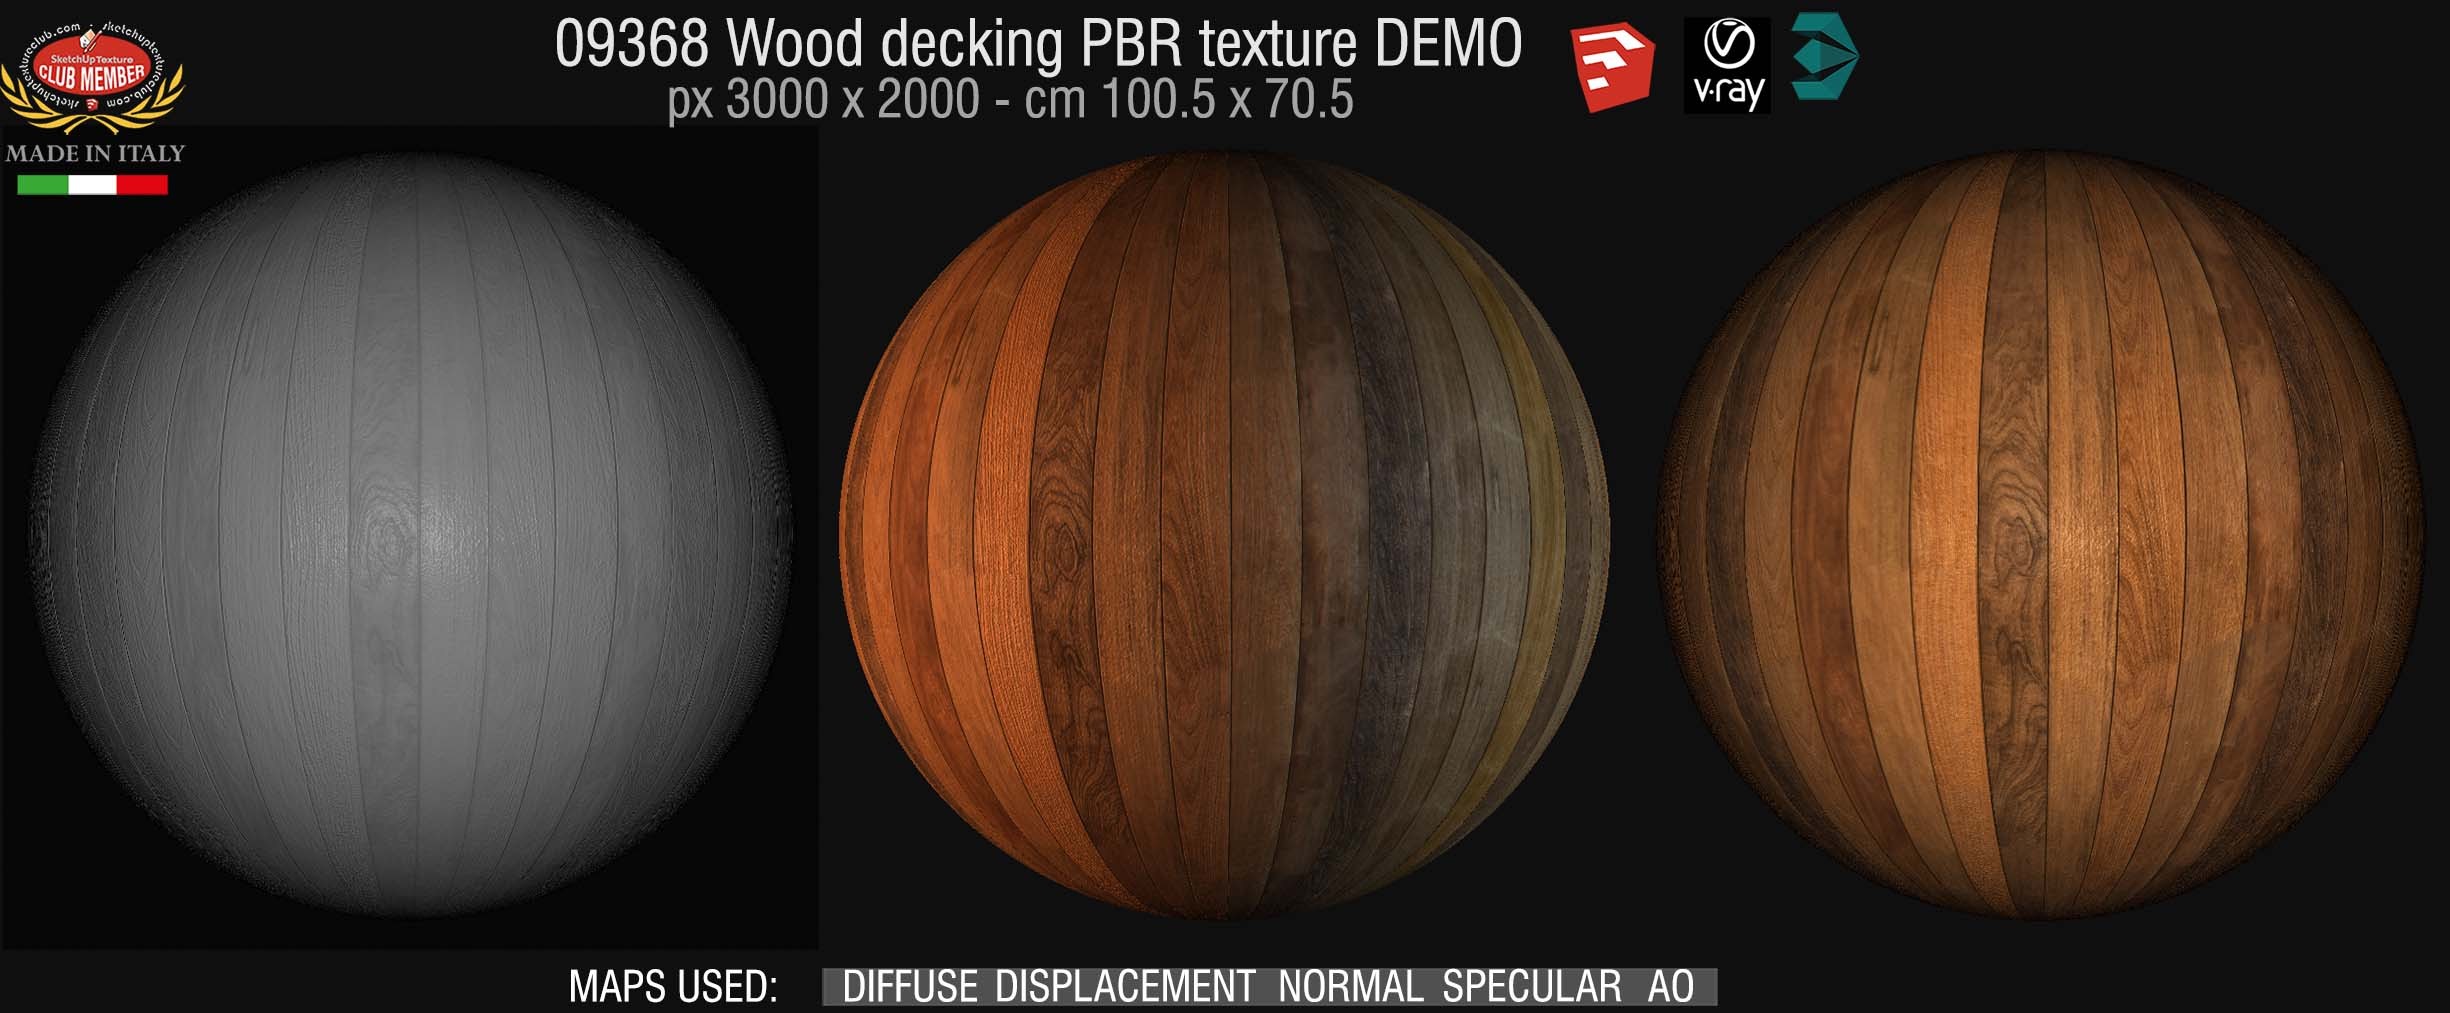 09368 Wood decking PBR texture seamless DEMO